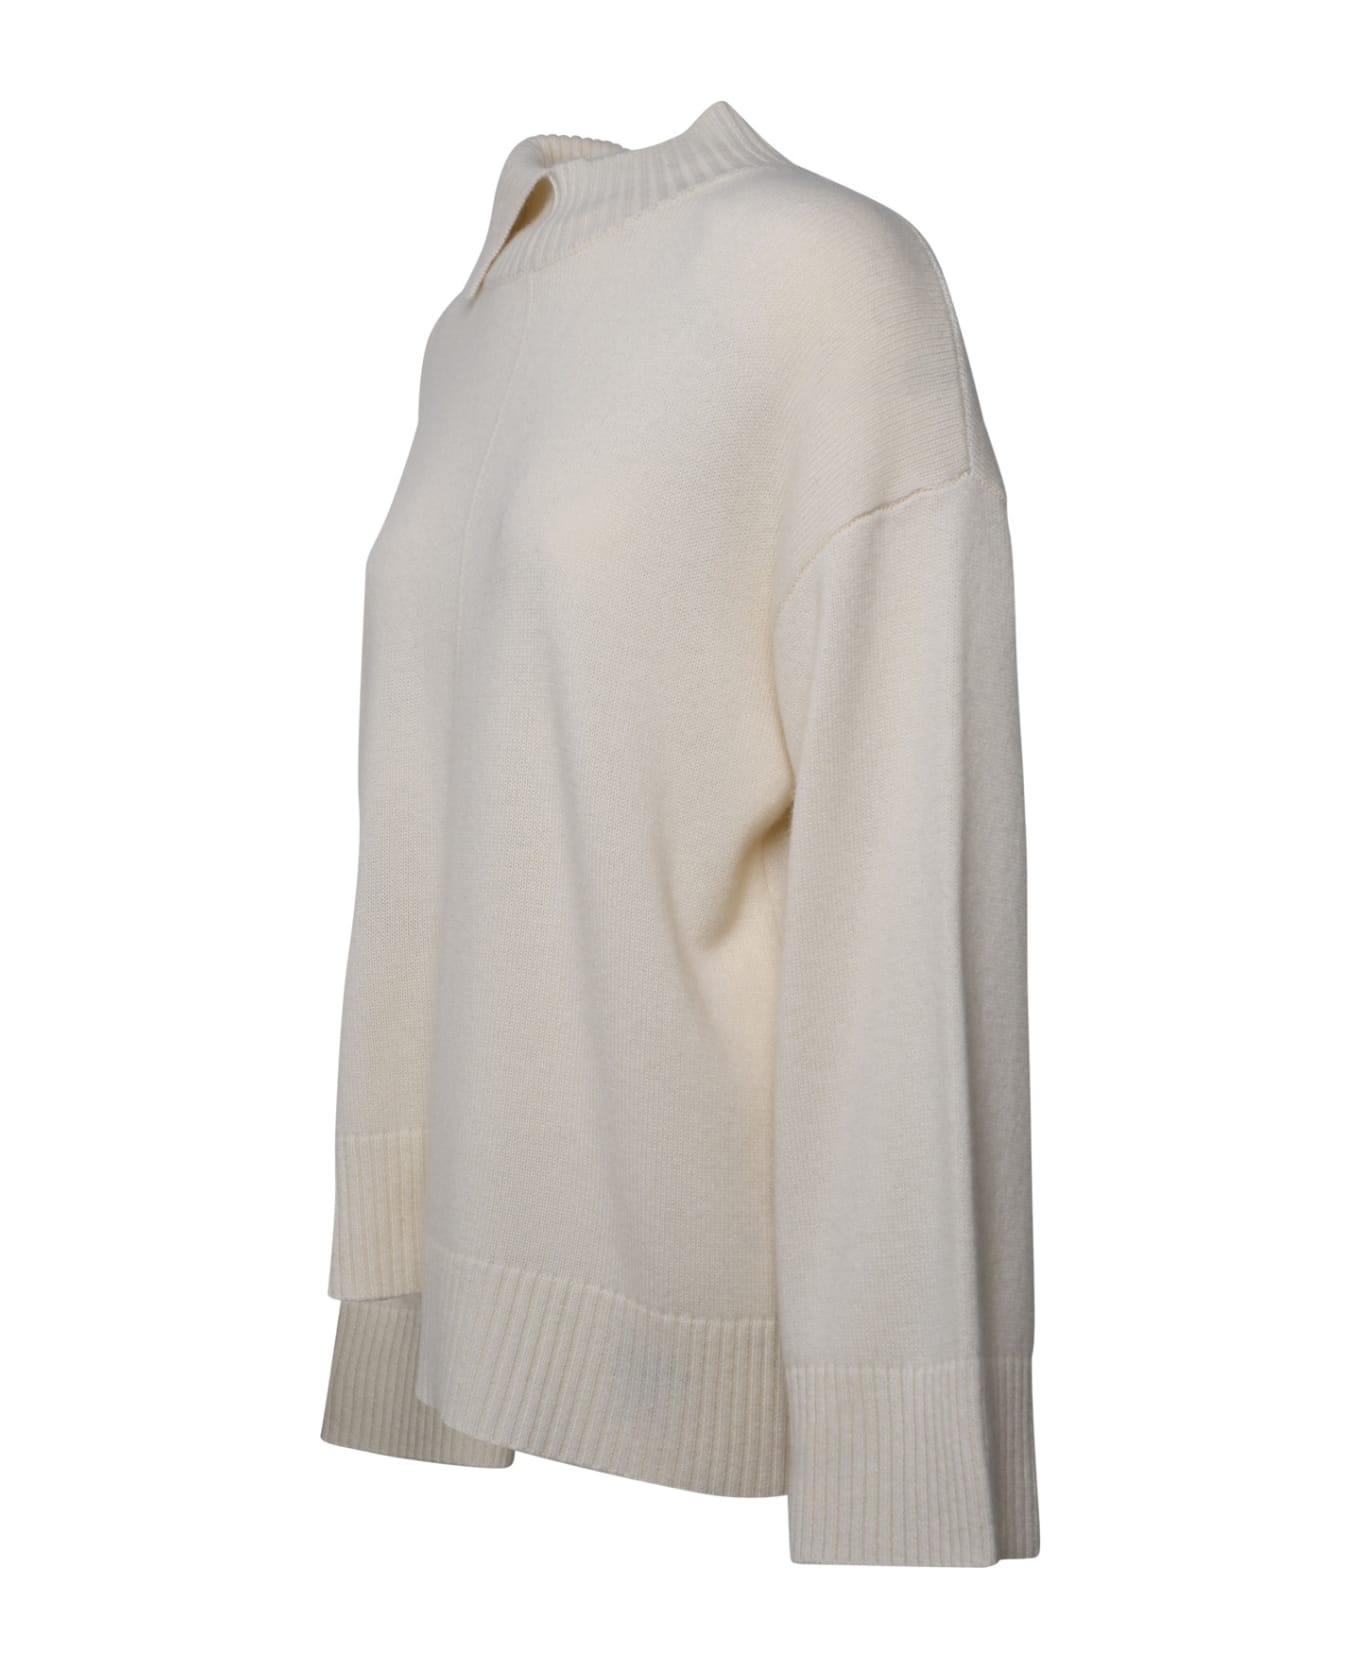 Parosh Cream Cashmere Blend Sweater - Cream ニットウェア